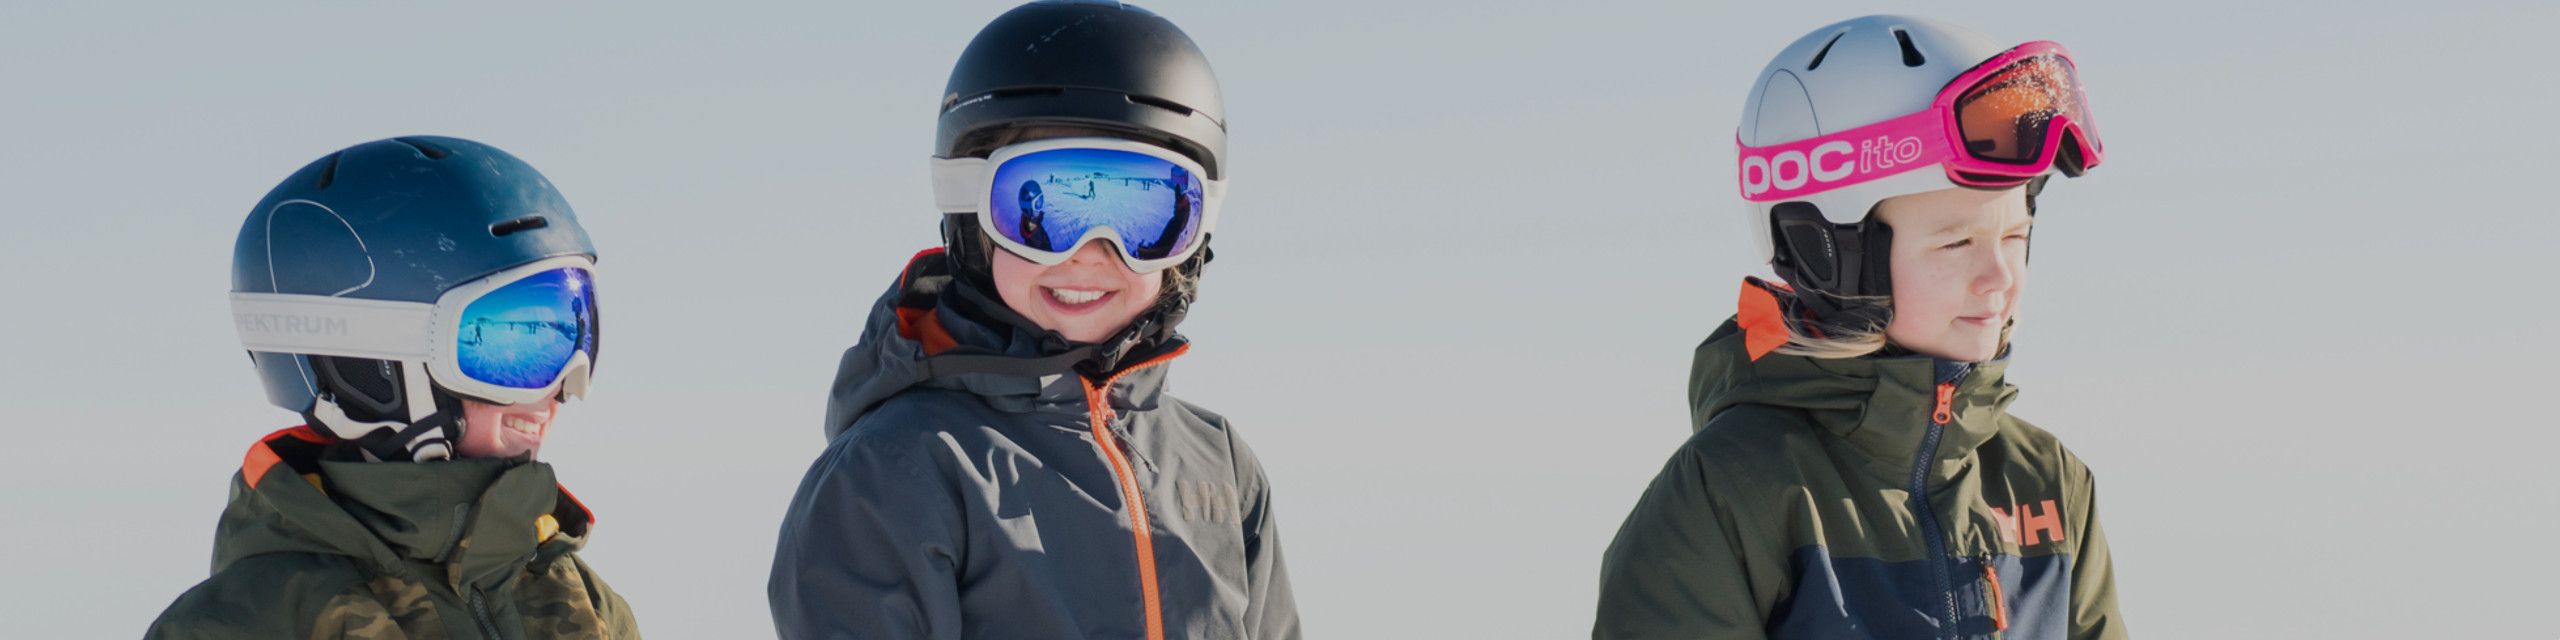 Ski goggles for kids